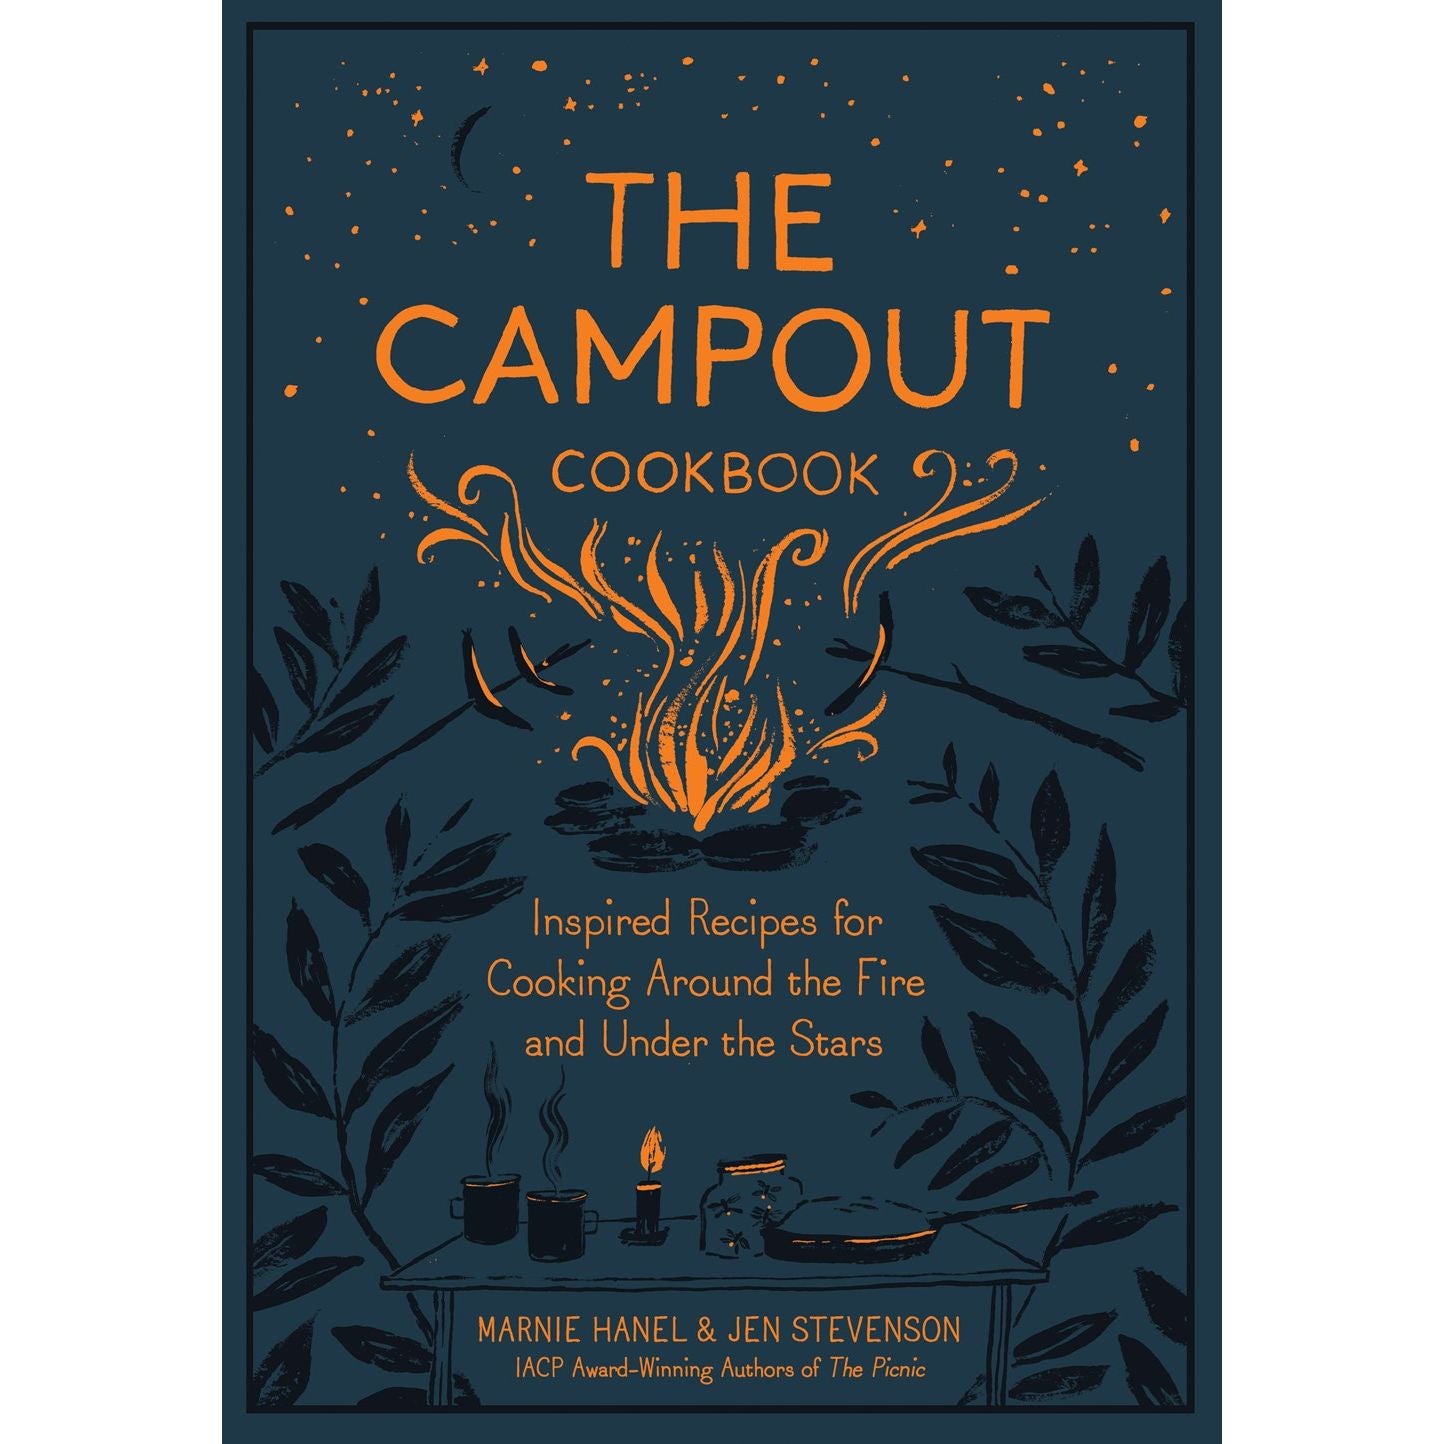 The Campout Cookbook (Marnie Hanel & Jen Stevenson)